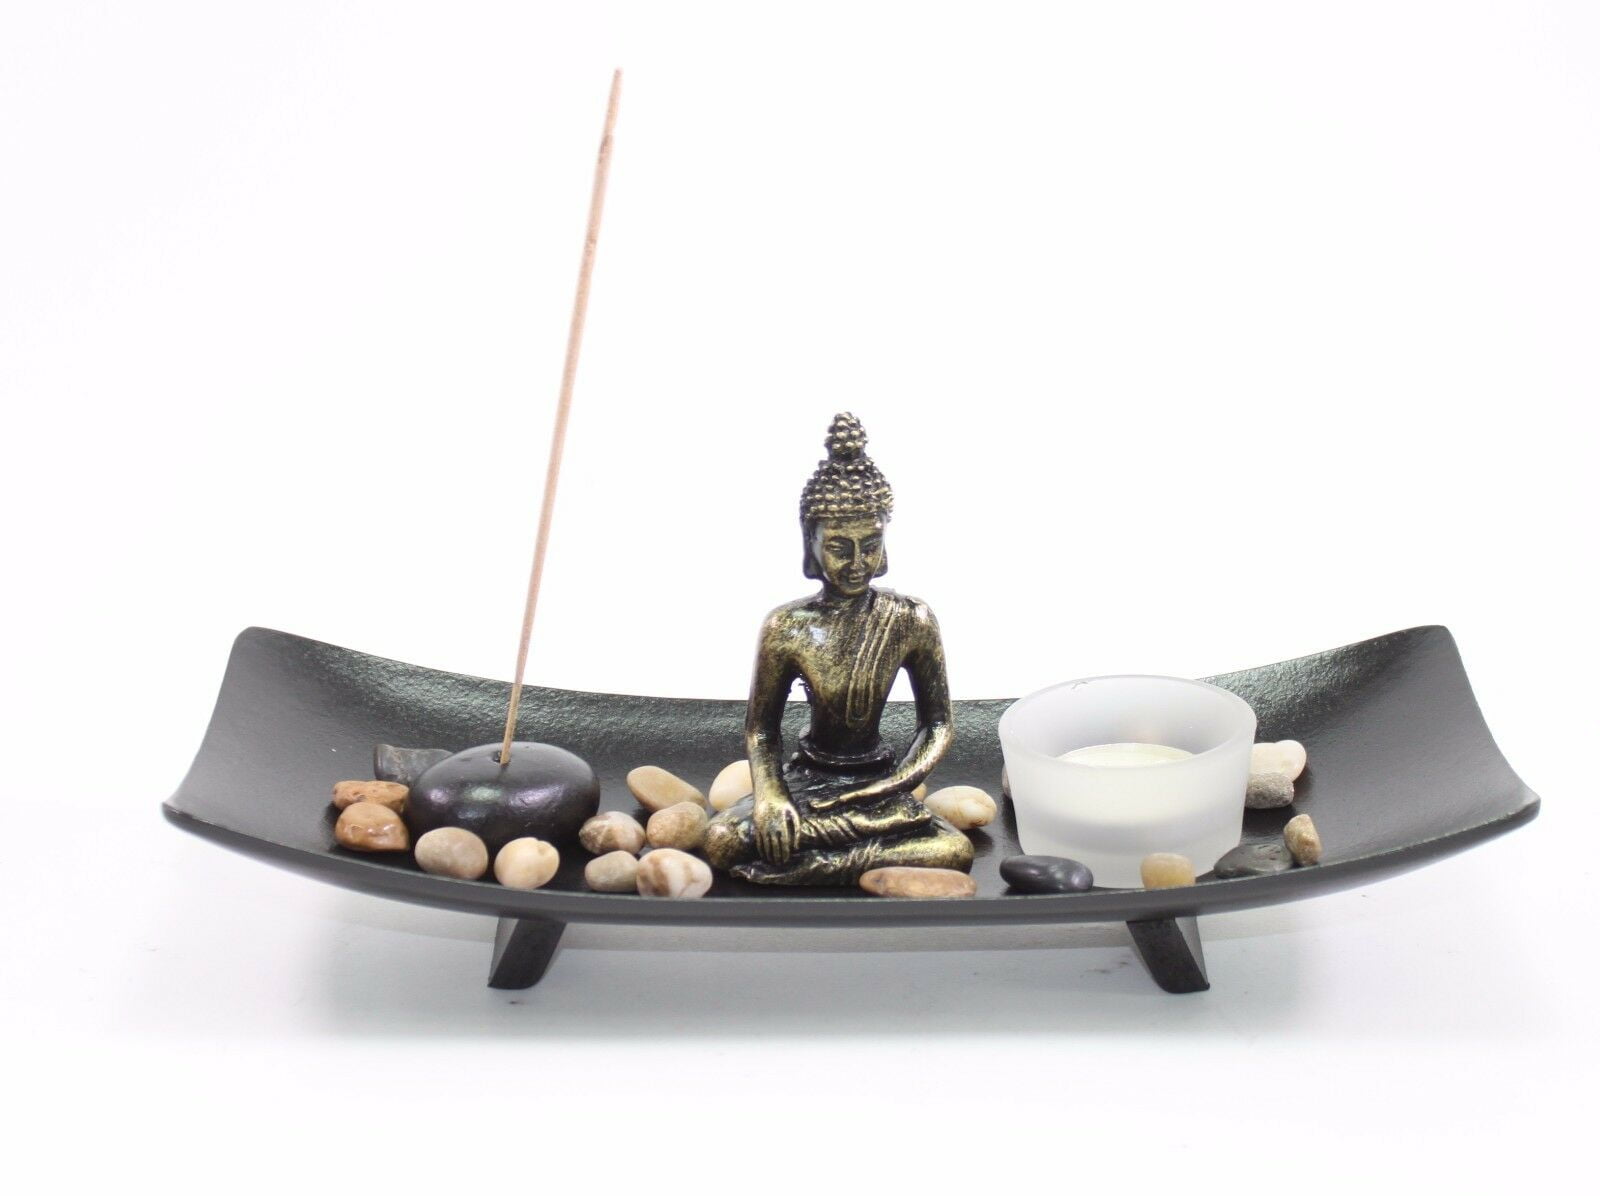 Tabletop Buddha Statue Home Zen Garden Buddhism Candlestick Incense Holder Set for Decor Relaxation 